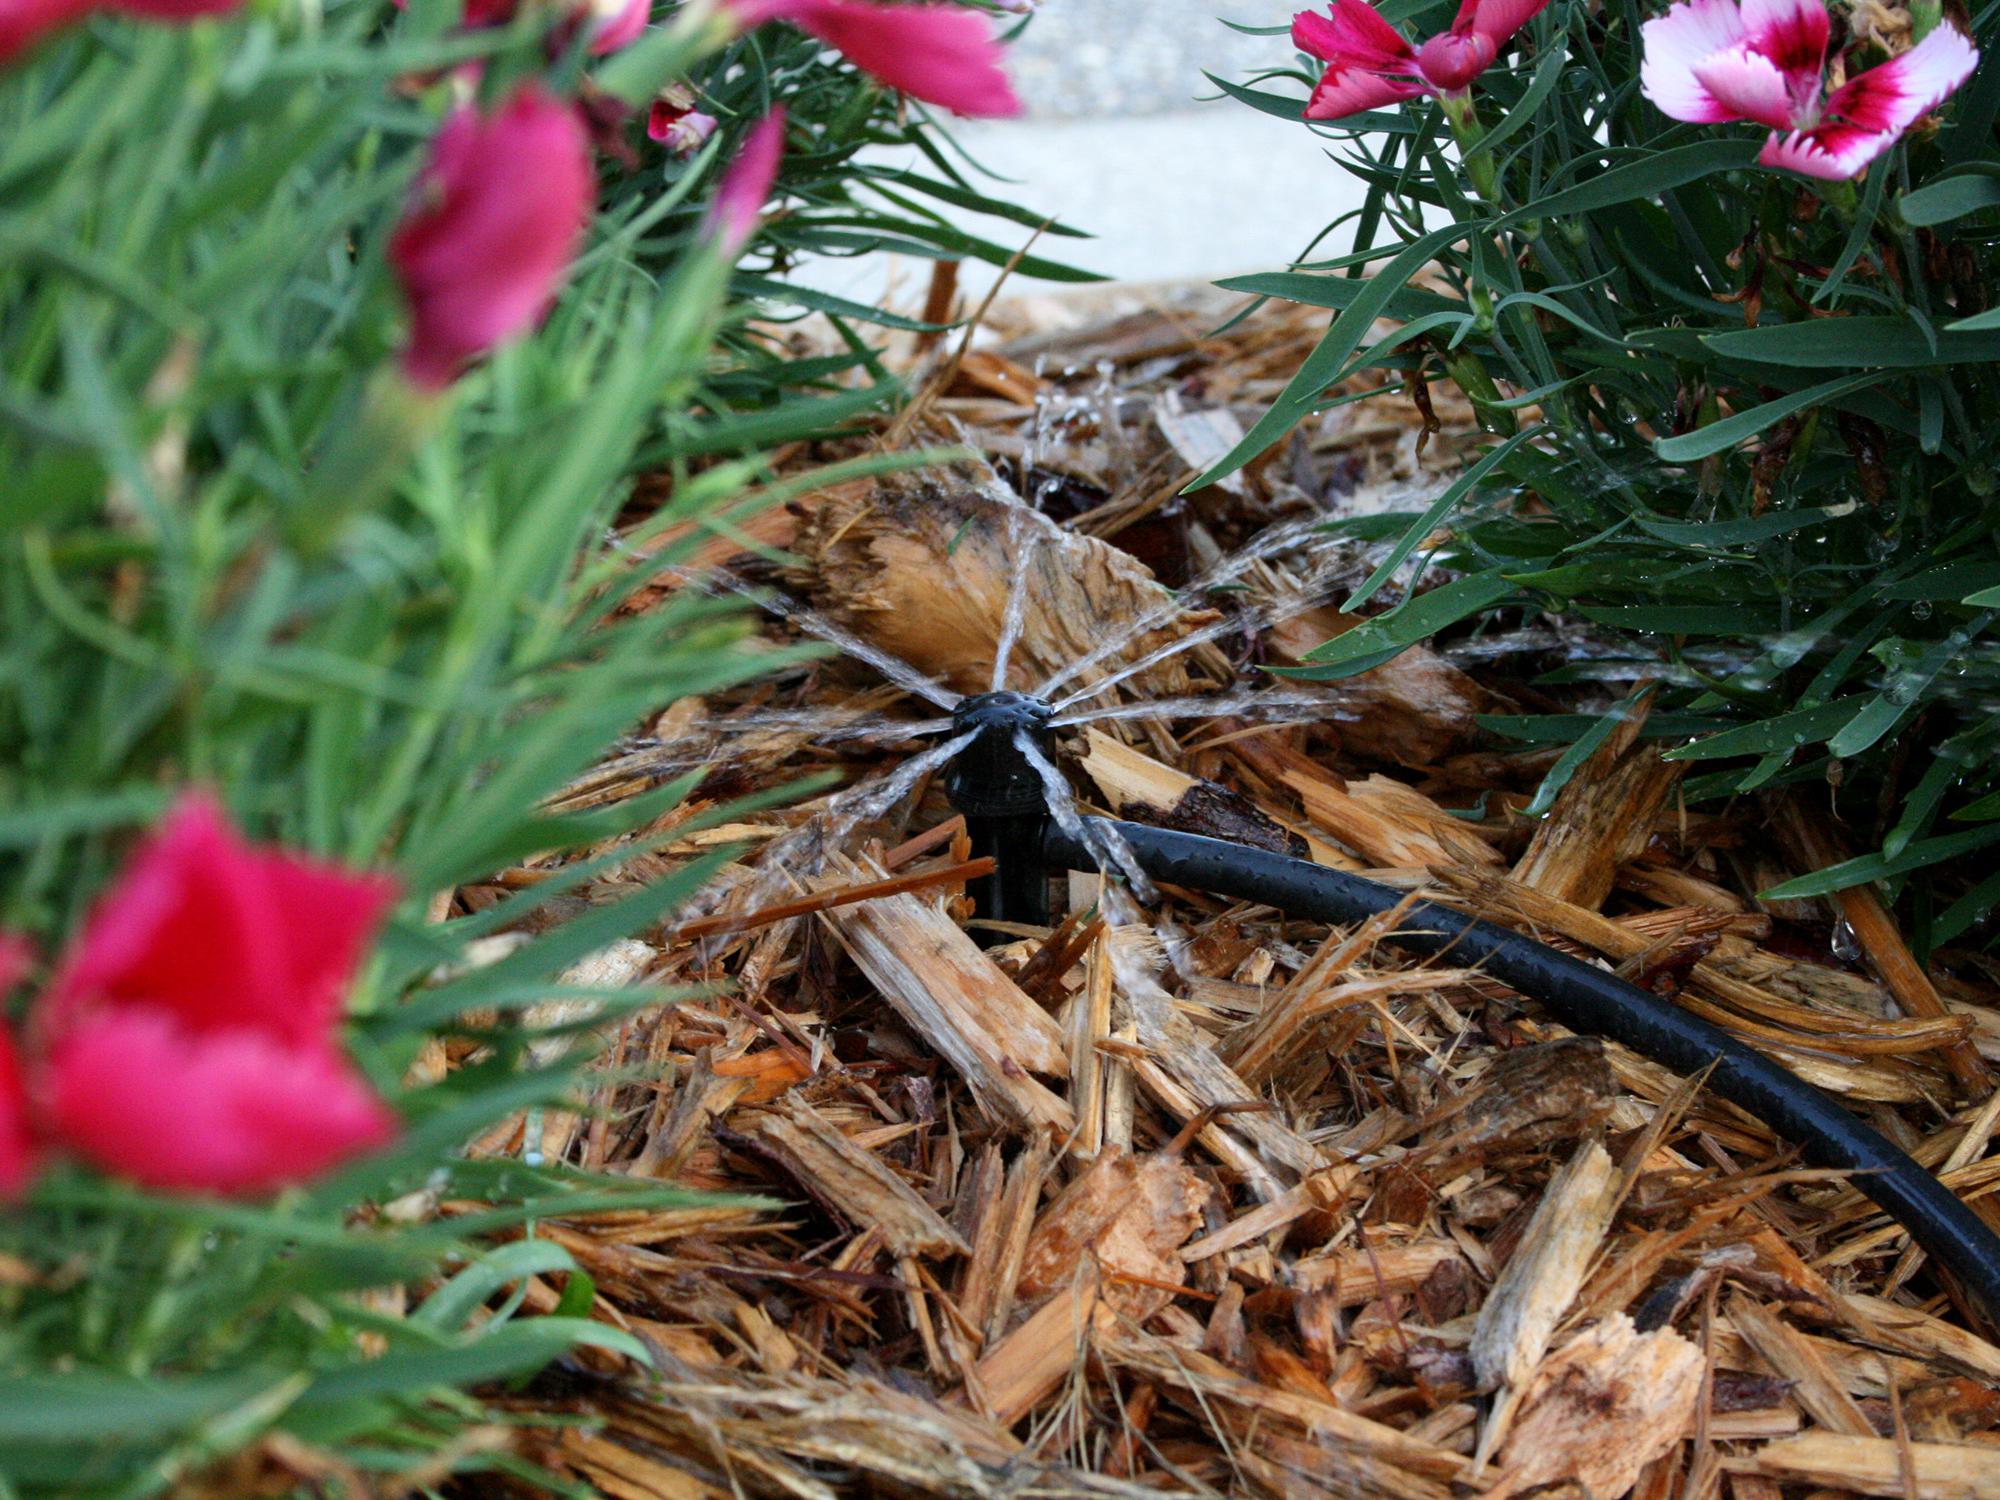 A sprinkler with a black hose nestled in light brown pine straw lightly sprays pink flowers.